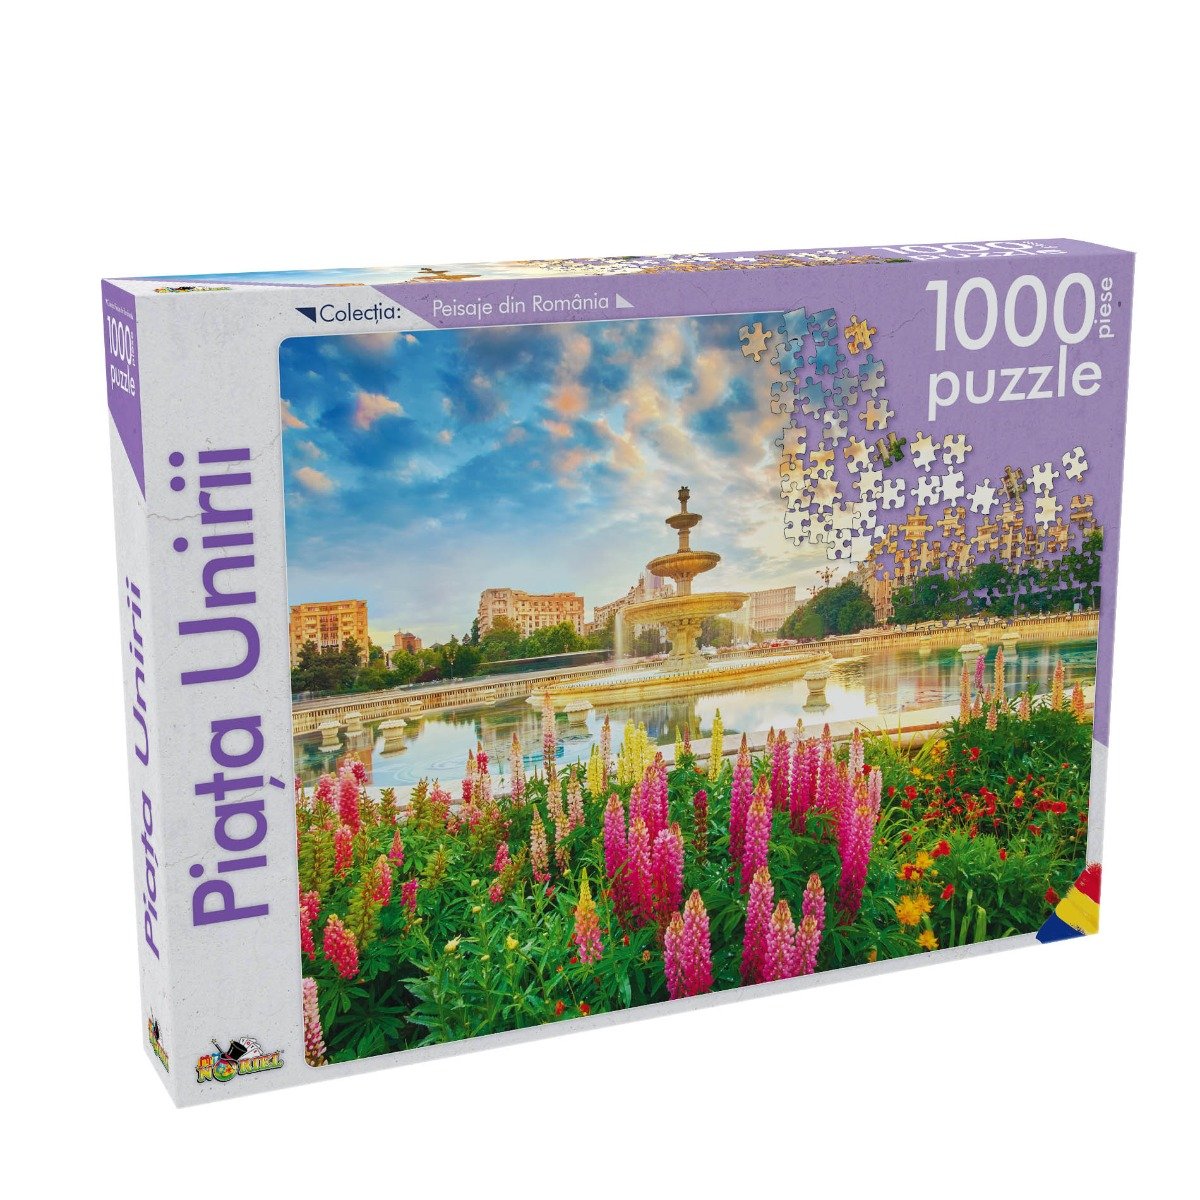 Puzzle Noriel - Peisaje din Romania - Piata Unirii, 1000 Piese